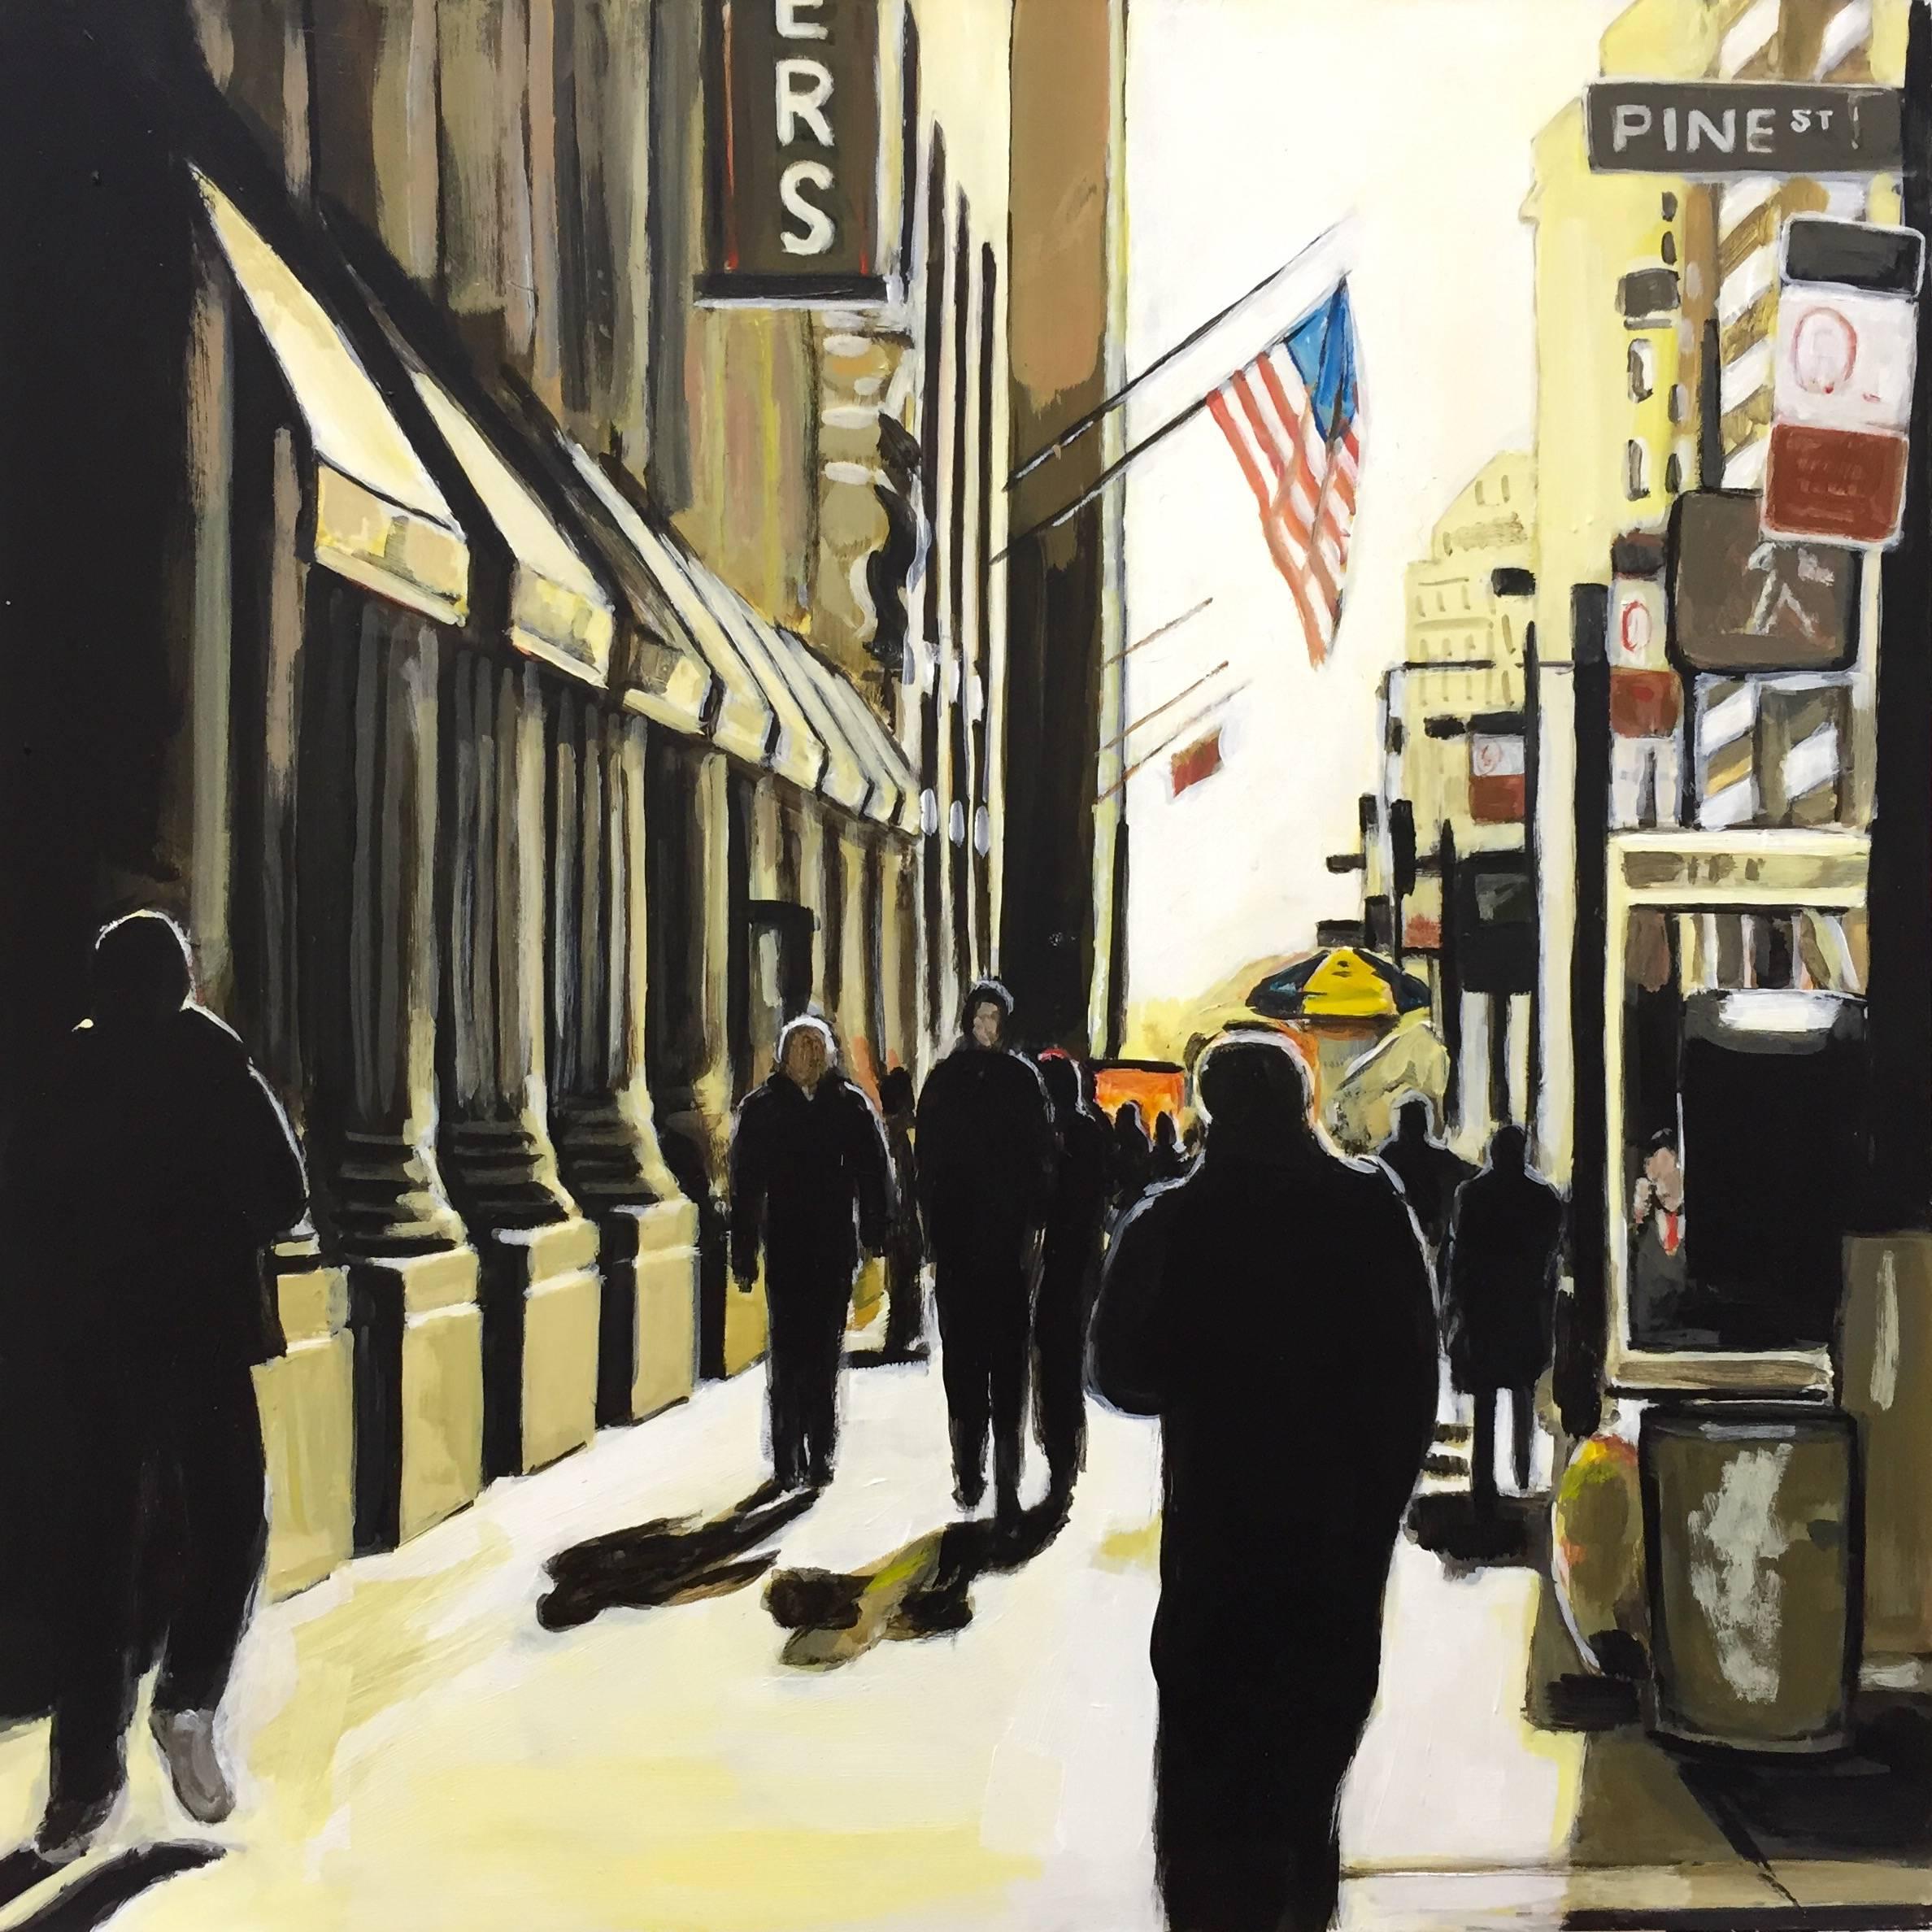 Angela Wakefield Figurative Painting - Painting of New York Sunshine on Pine Street NYC by Leading British Urban Artist